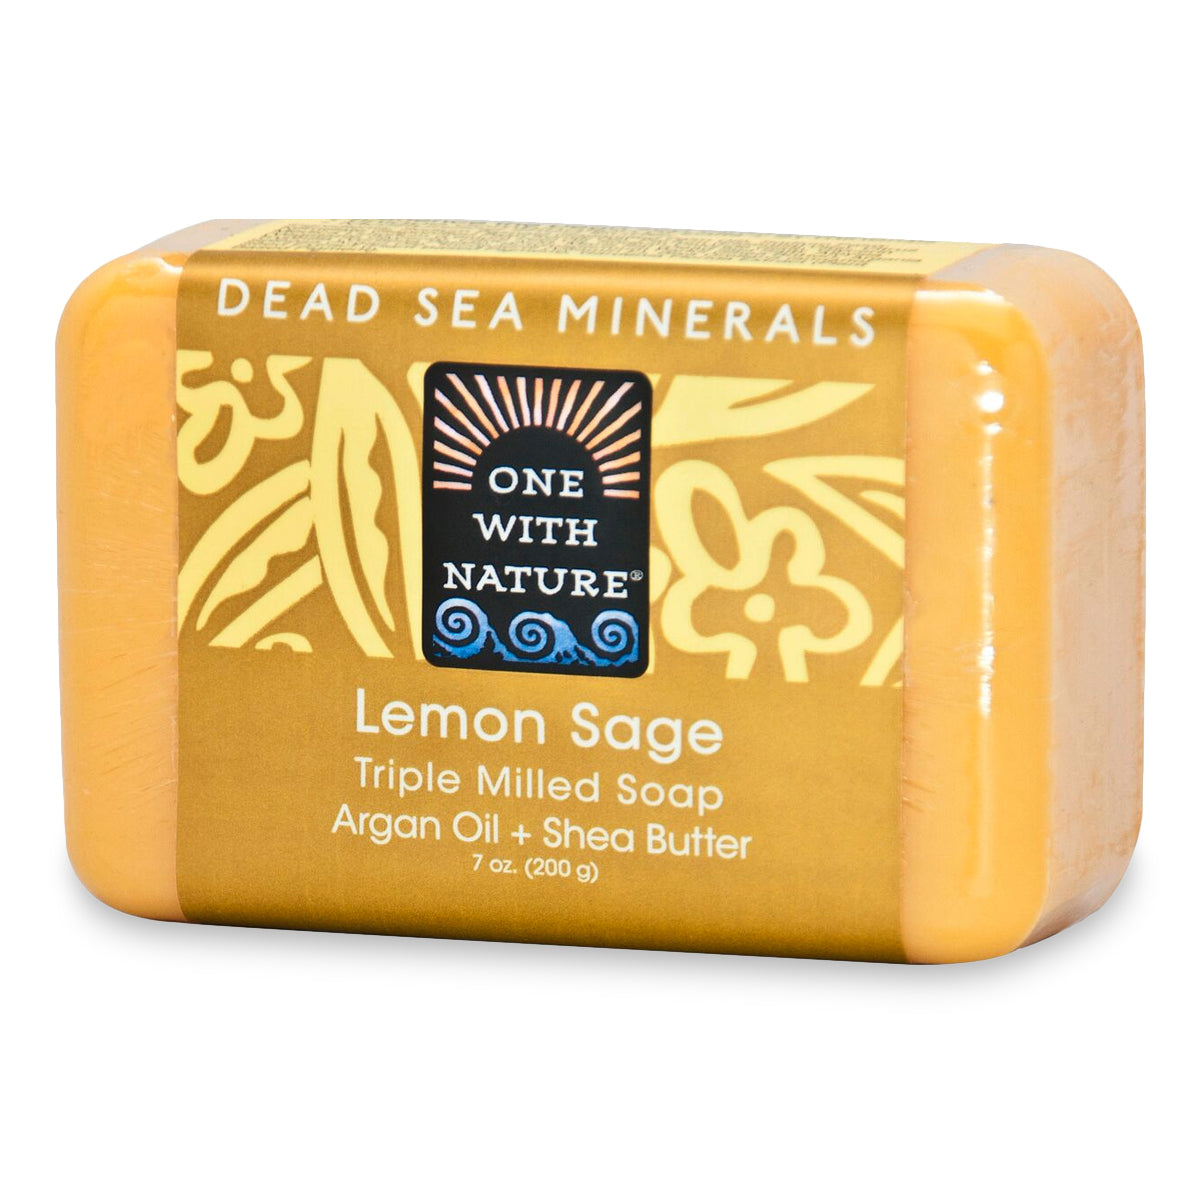 Primary image of Dead Sea Mineral Soap - Lemon Sage